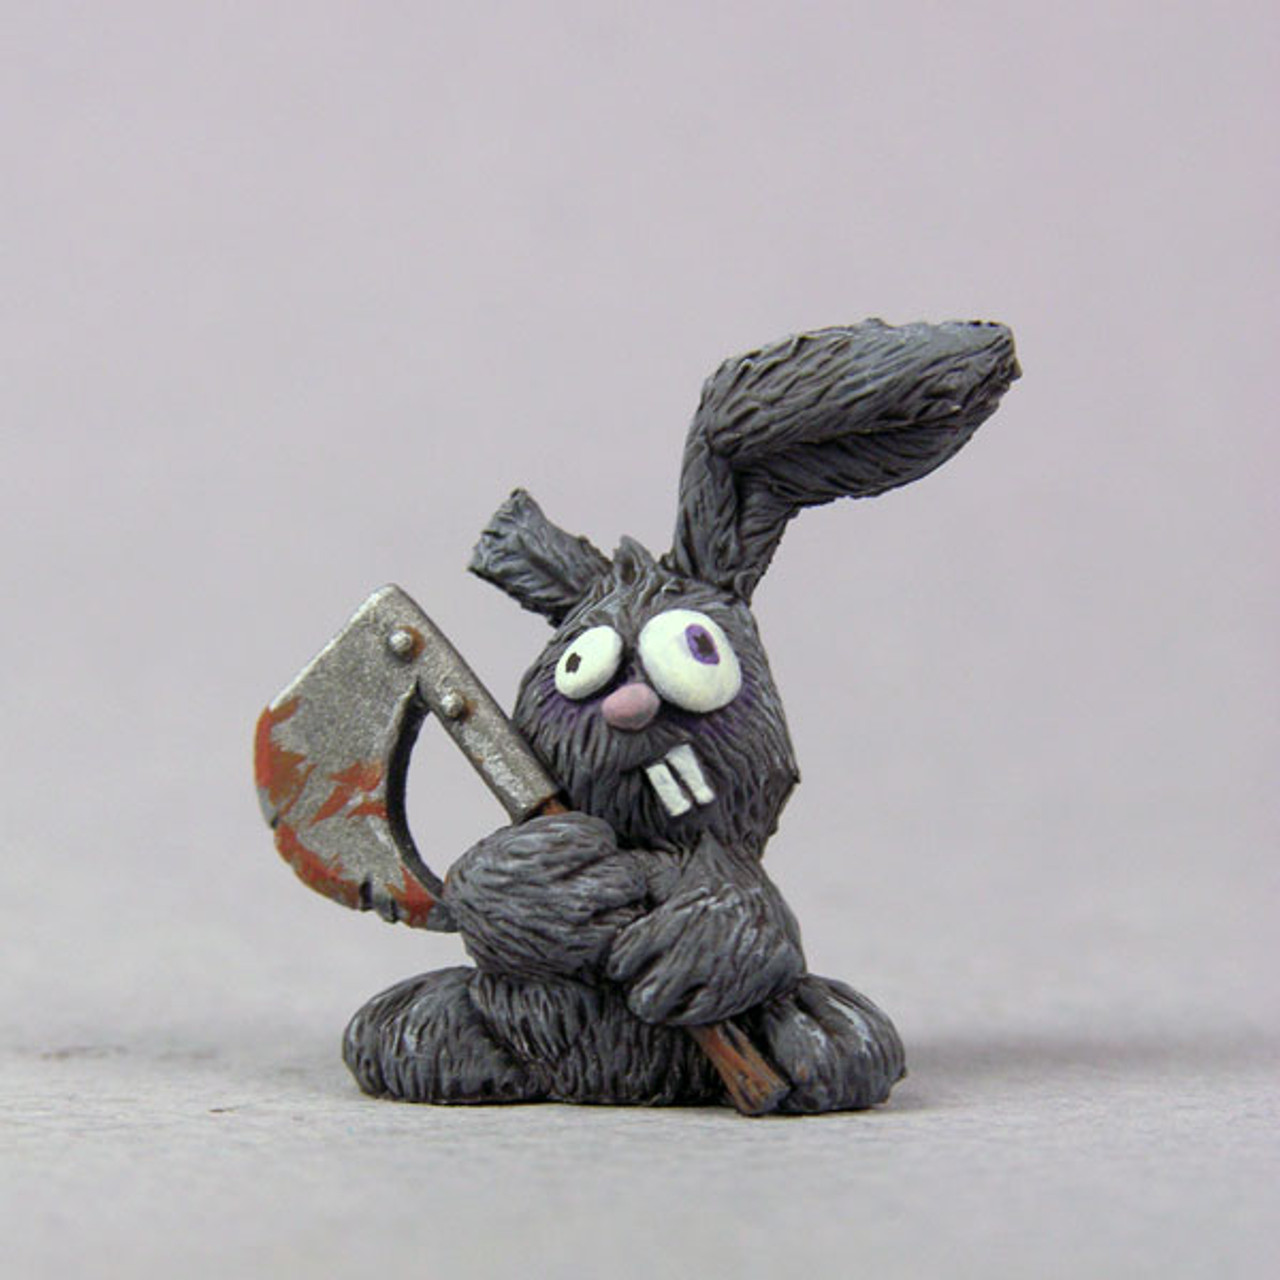 60012 - Doom Bunny